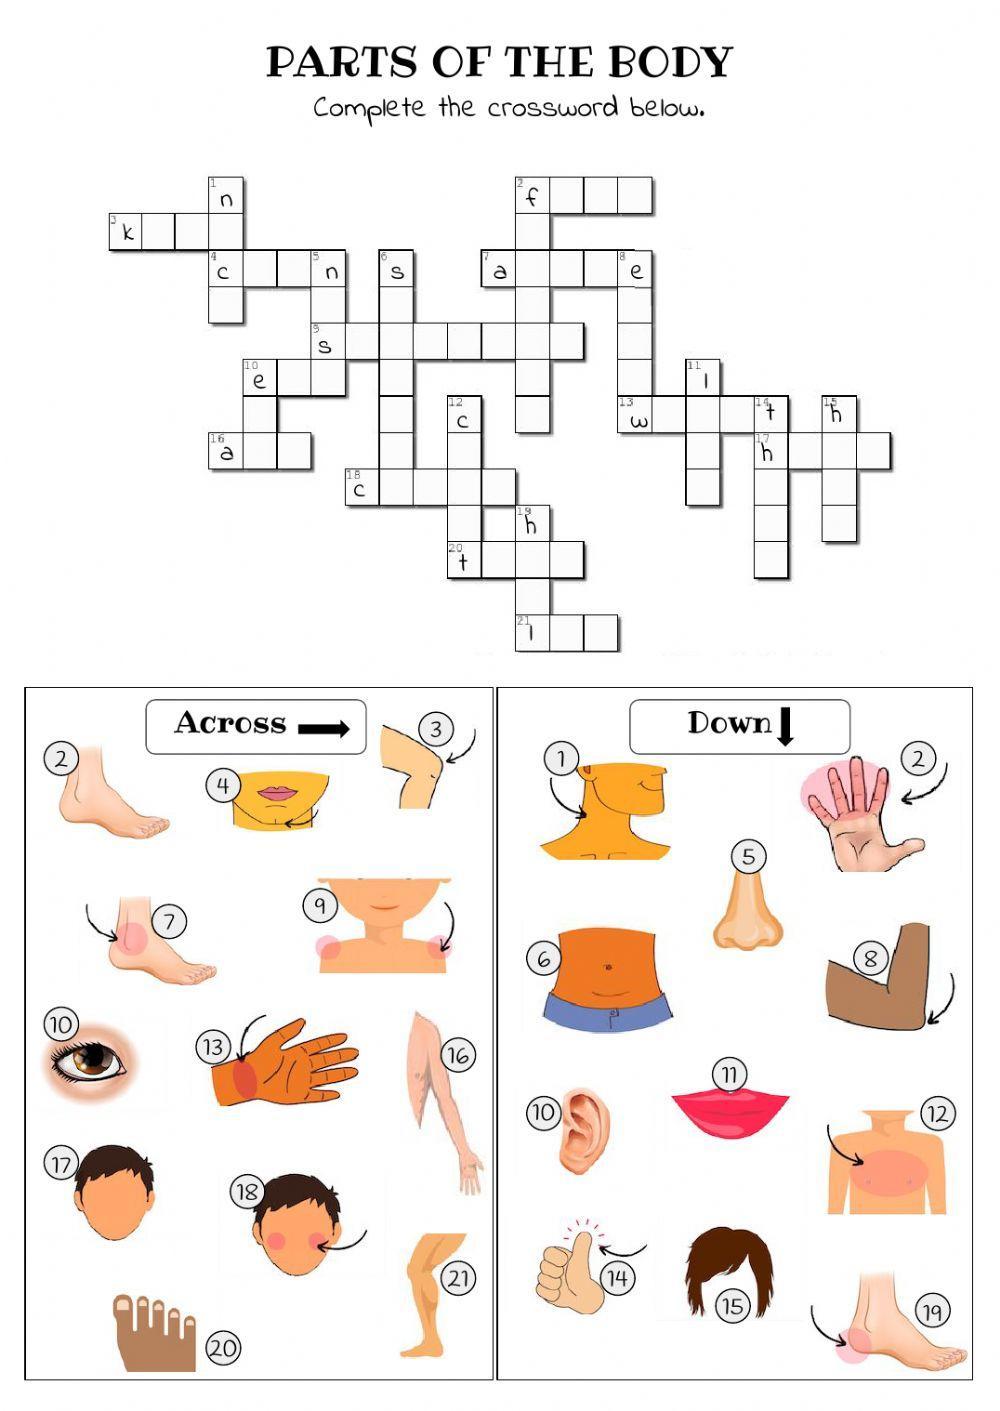 Parts of the body crossword